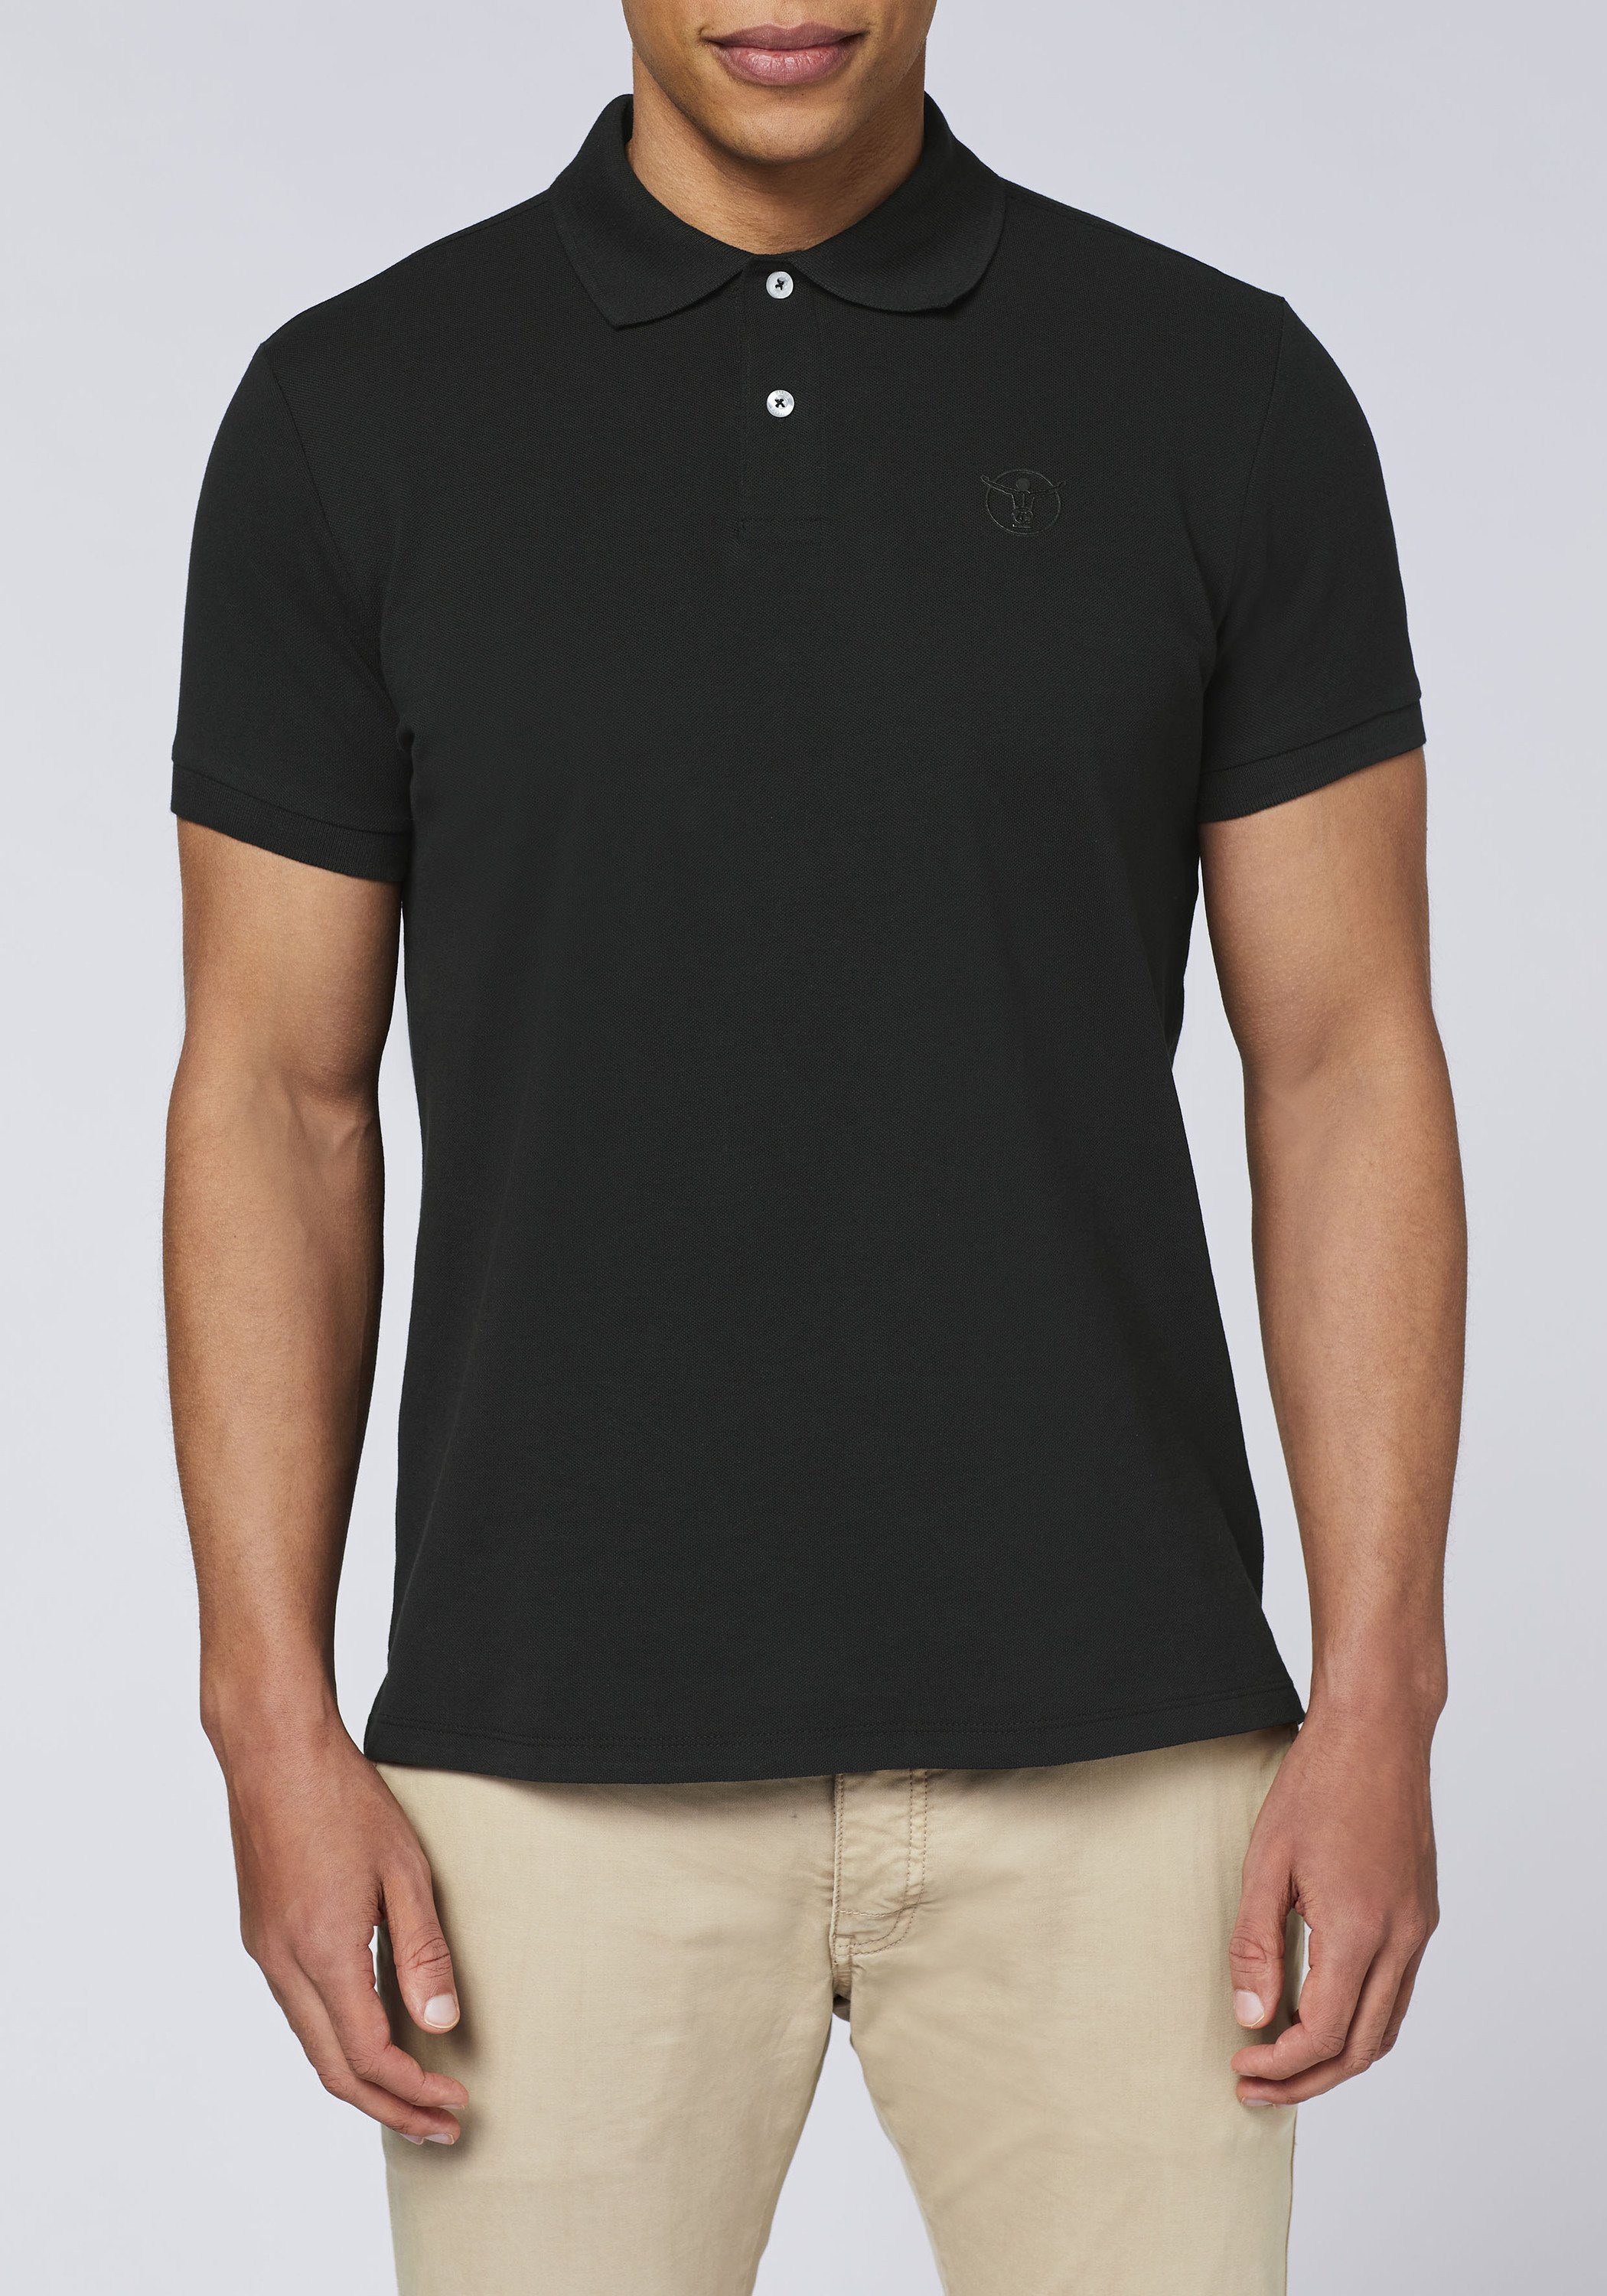 Chiemsee Poloshirt Poloshirt Jumper-Logo mit 19-3911 Black Beauty 1